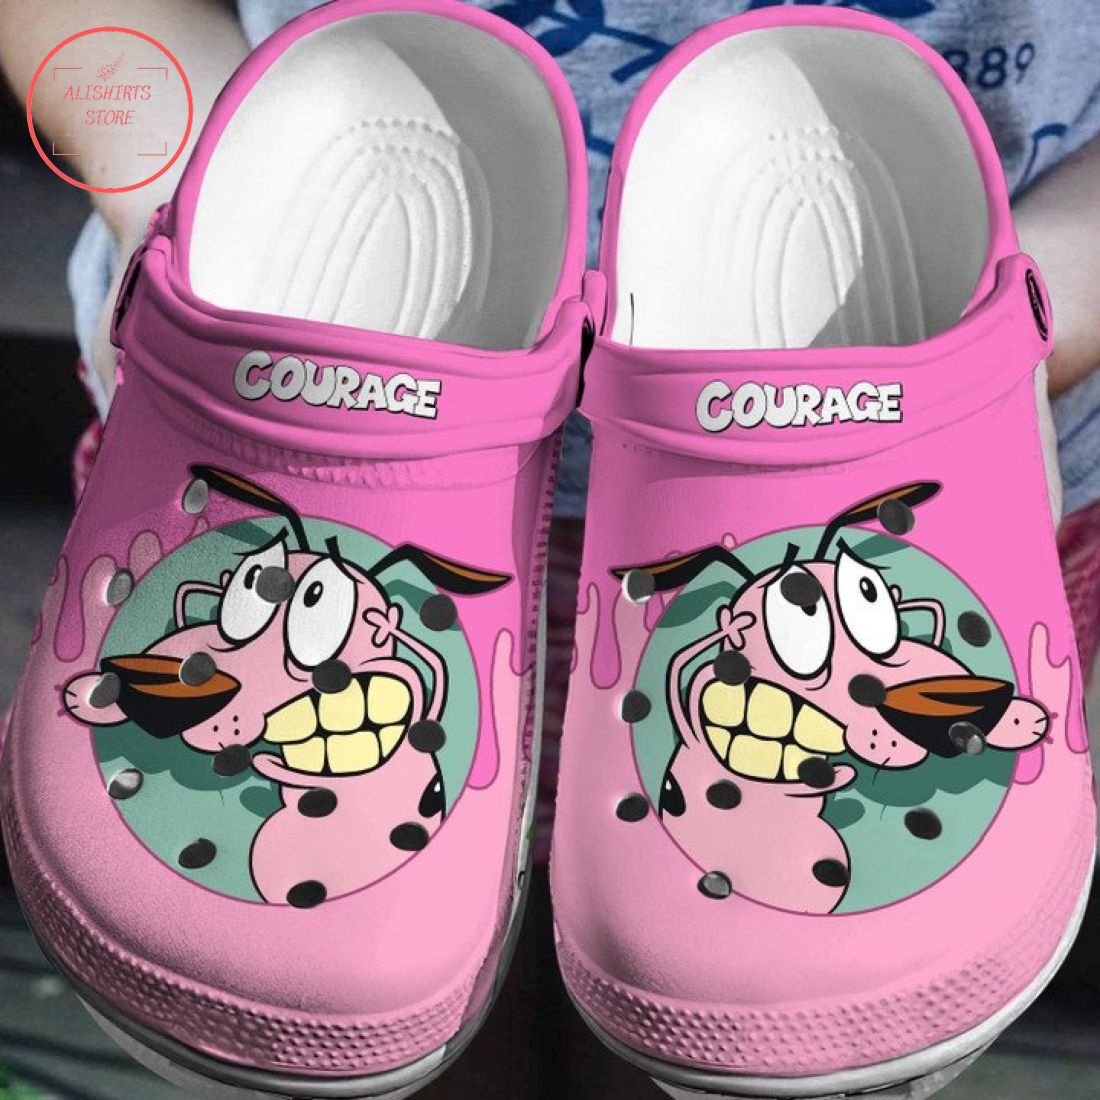 Disney Courage Pink Crocs Crocband Clog